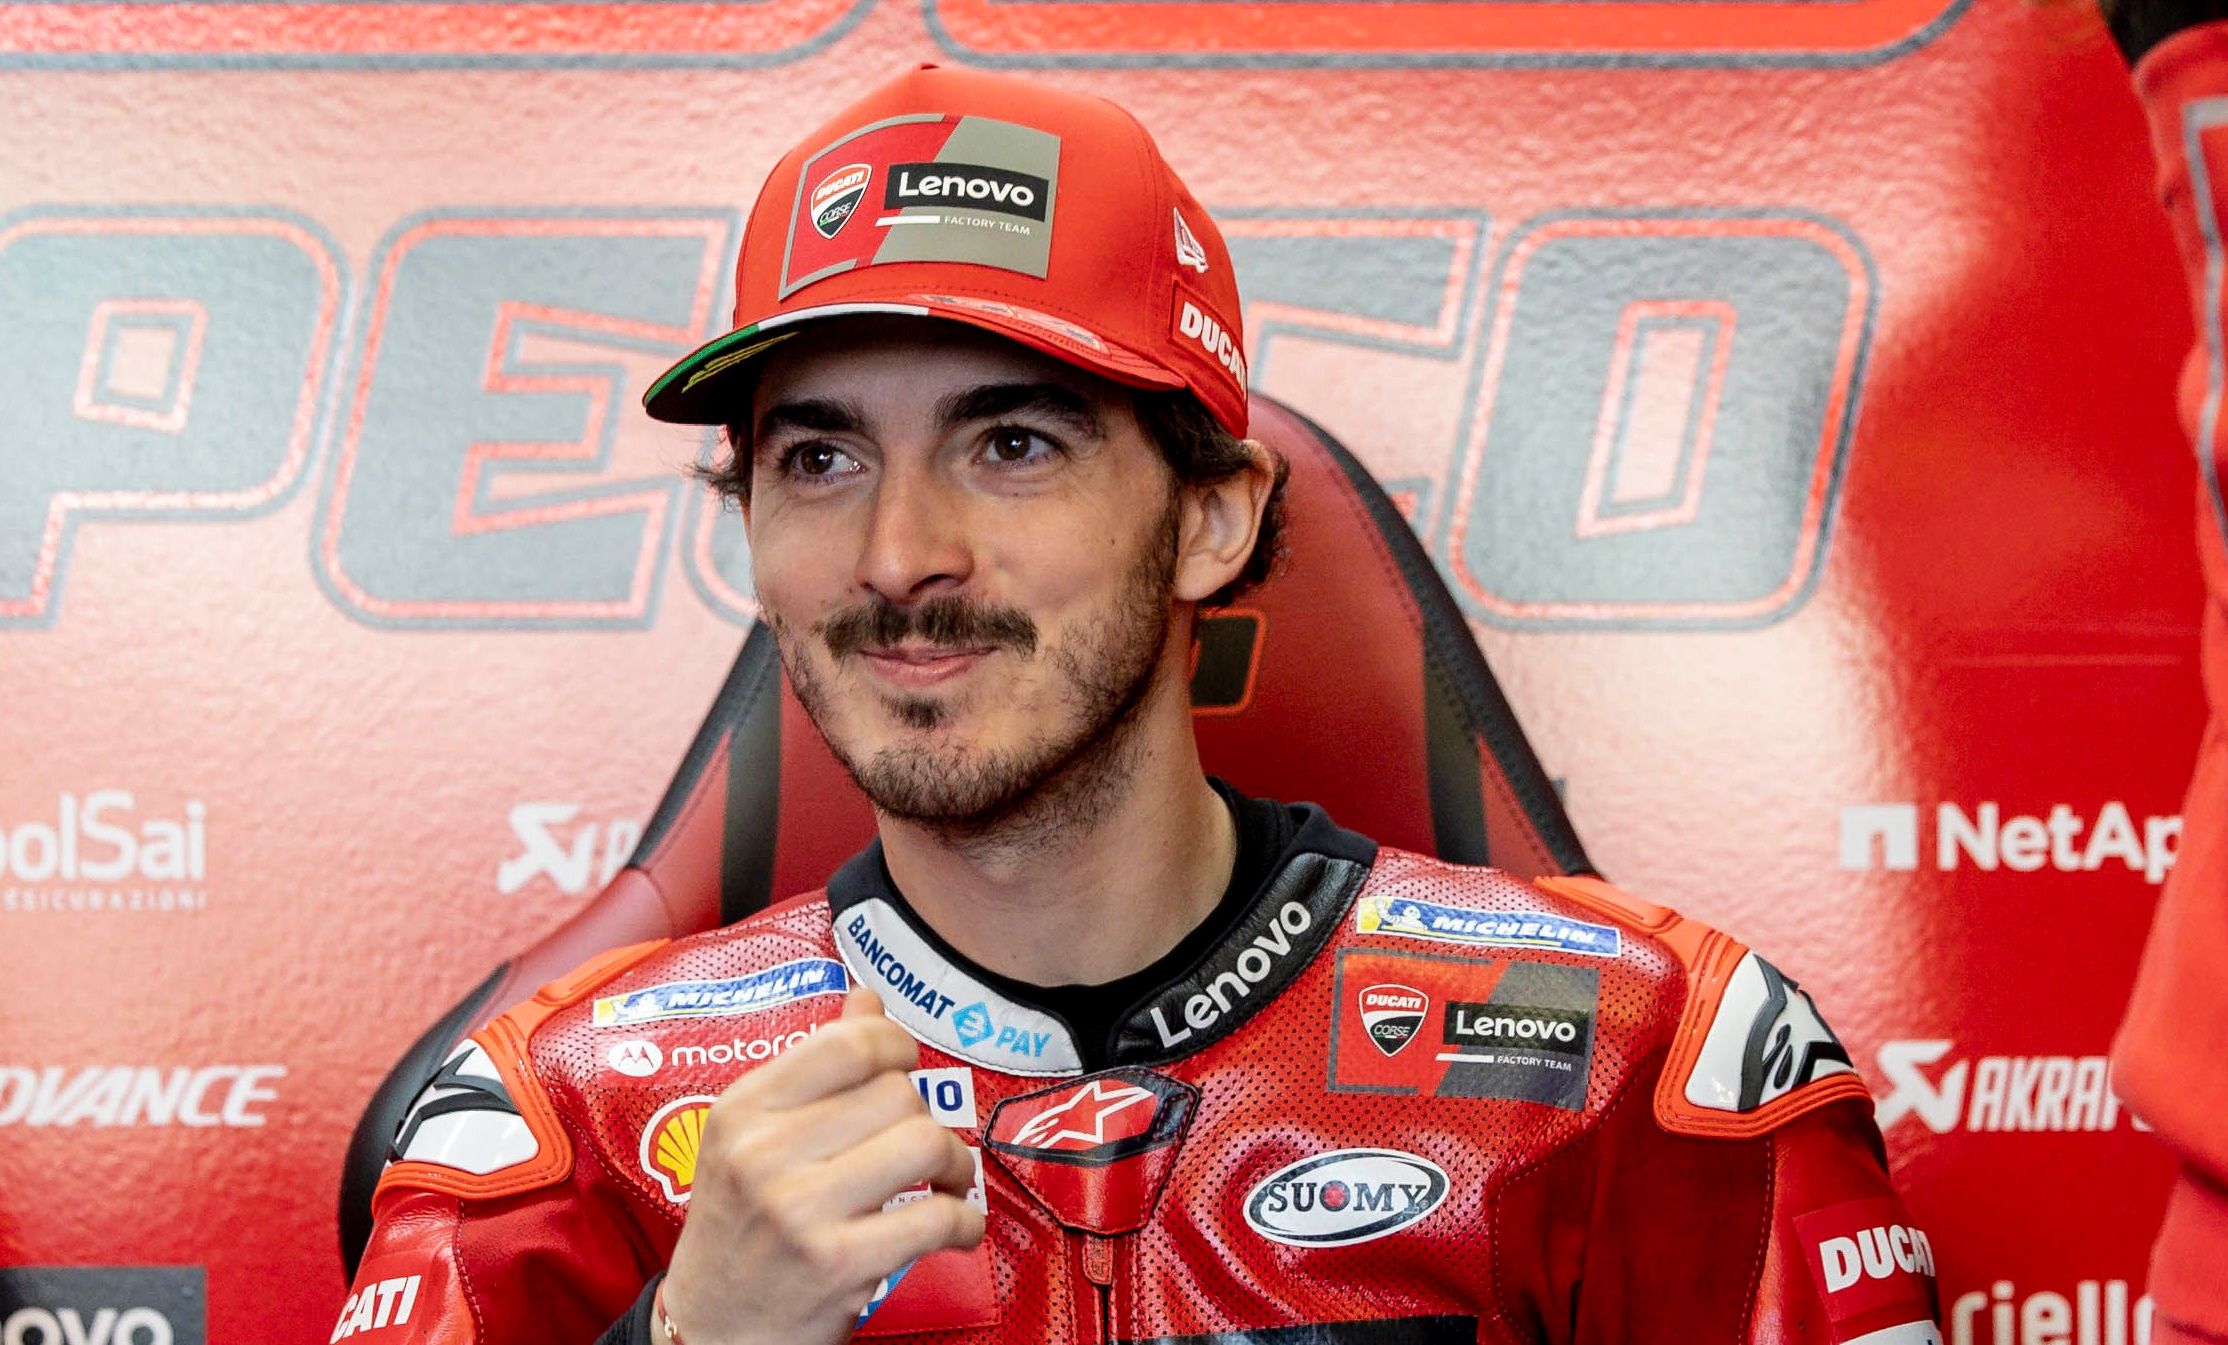 Pembalap tim Ducati, Francesco Bagnaia menempati pole position untuk race MotoGP Prancis besok, 15 Mei 2022.